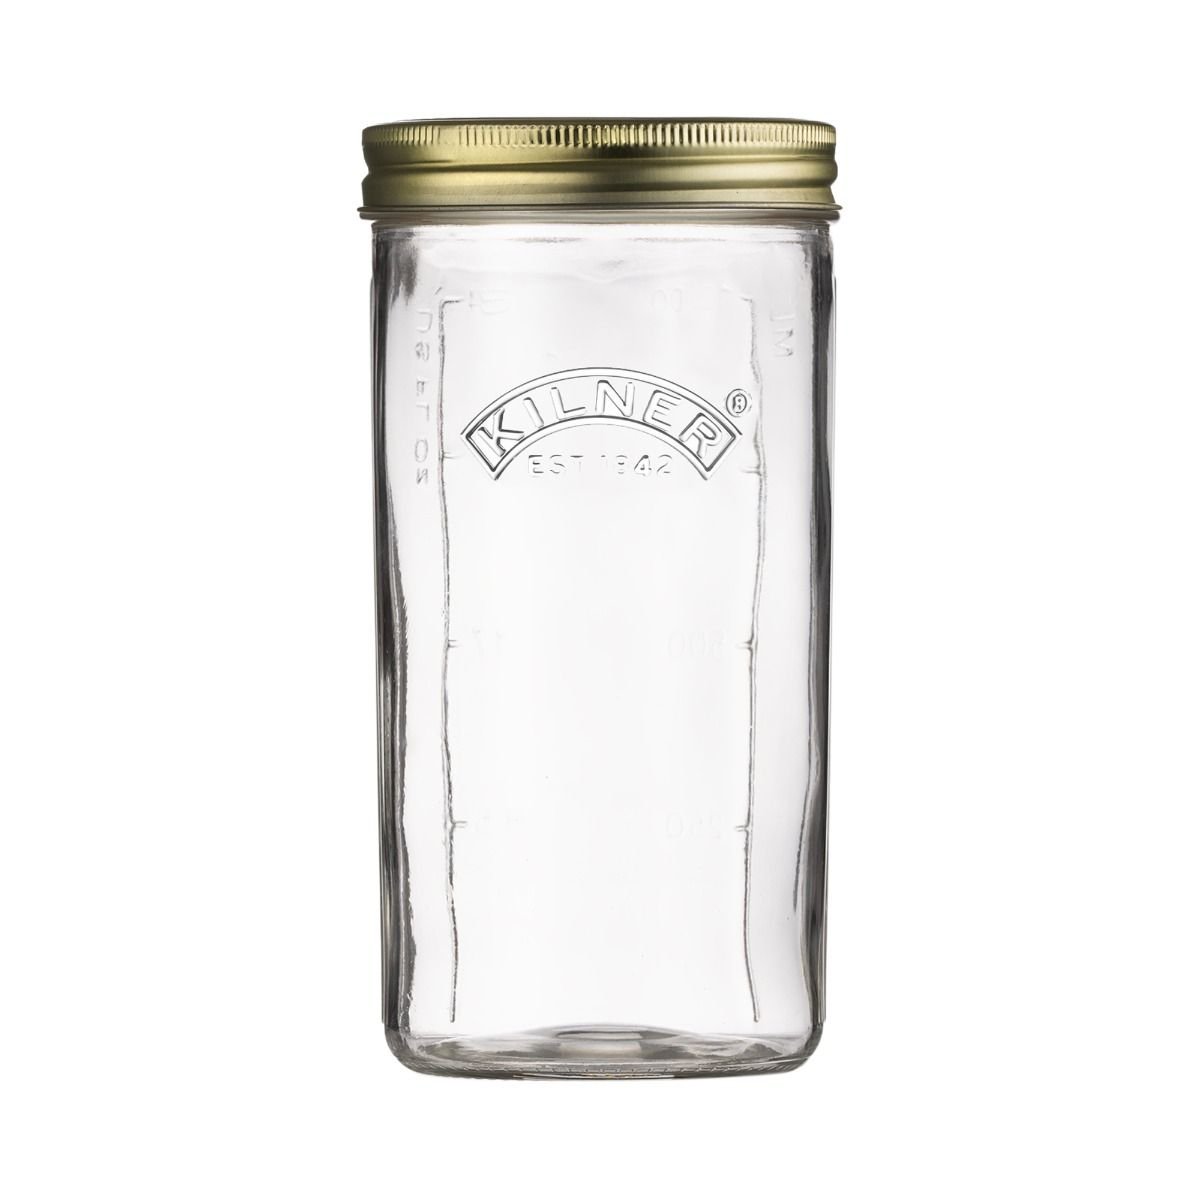 wide mouth mason jar sizes - Google Search